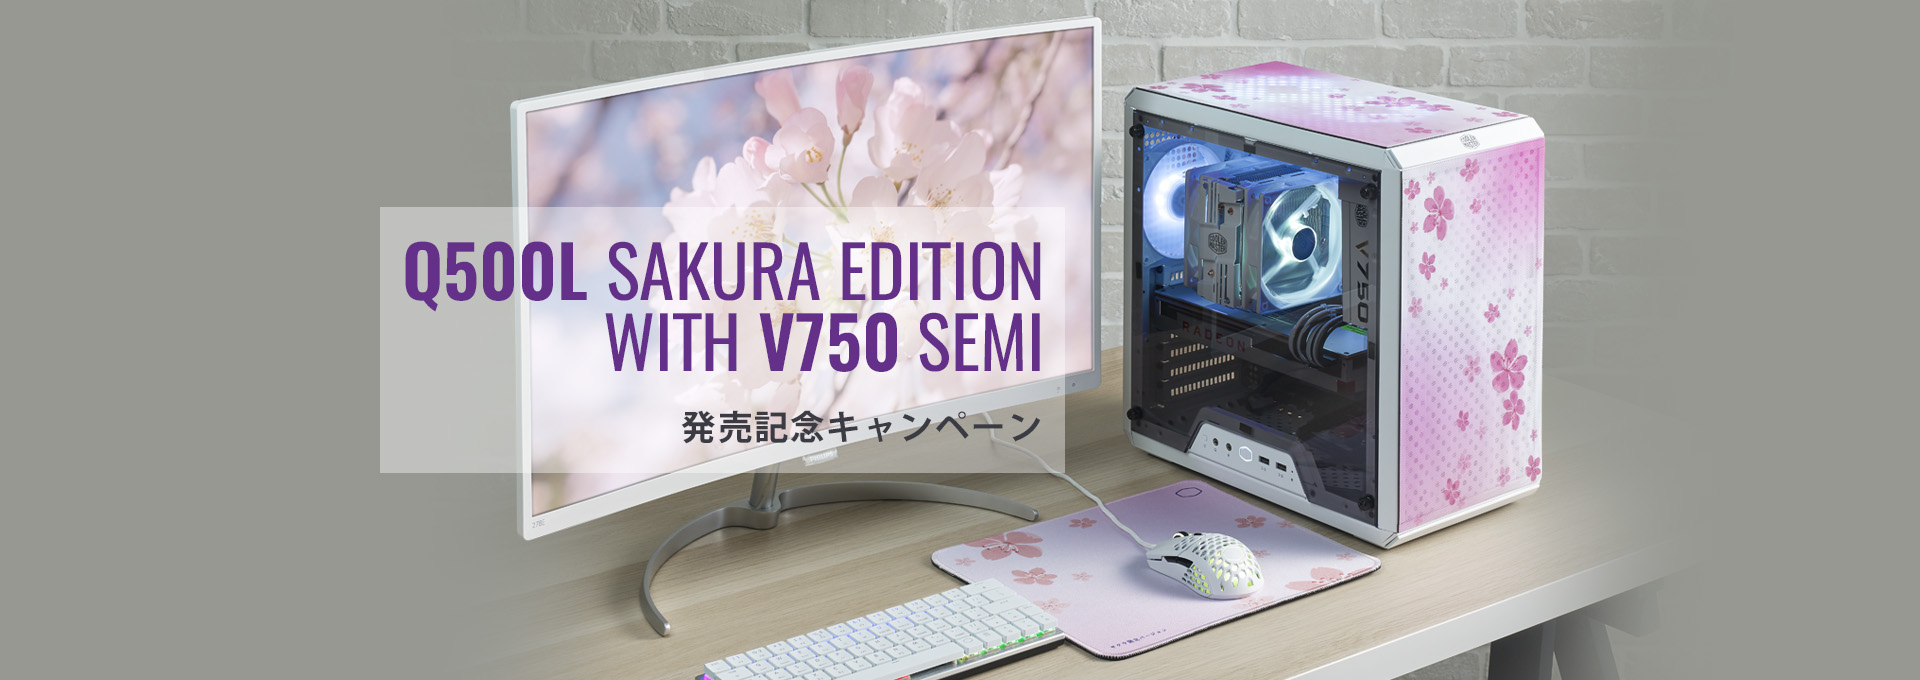 Q500L Sakura Edition with V750 Semi